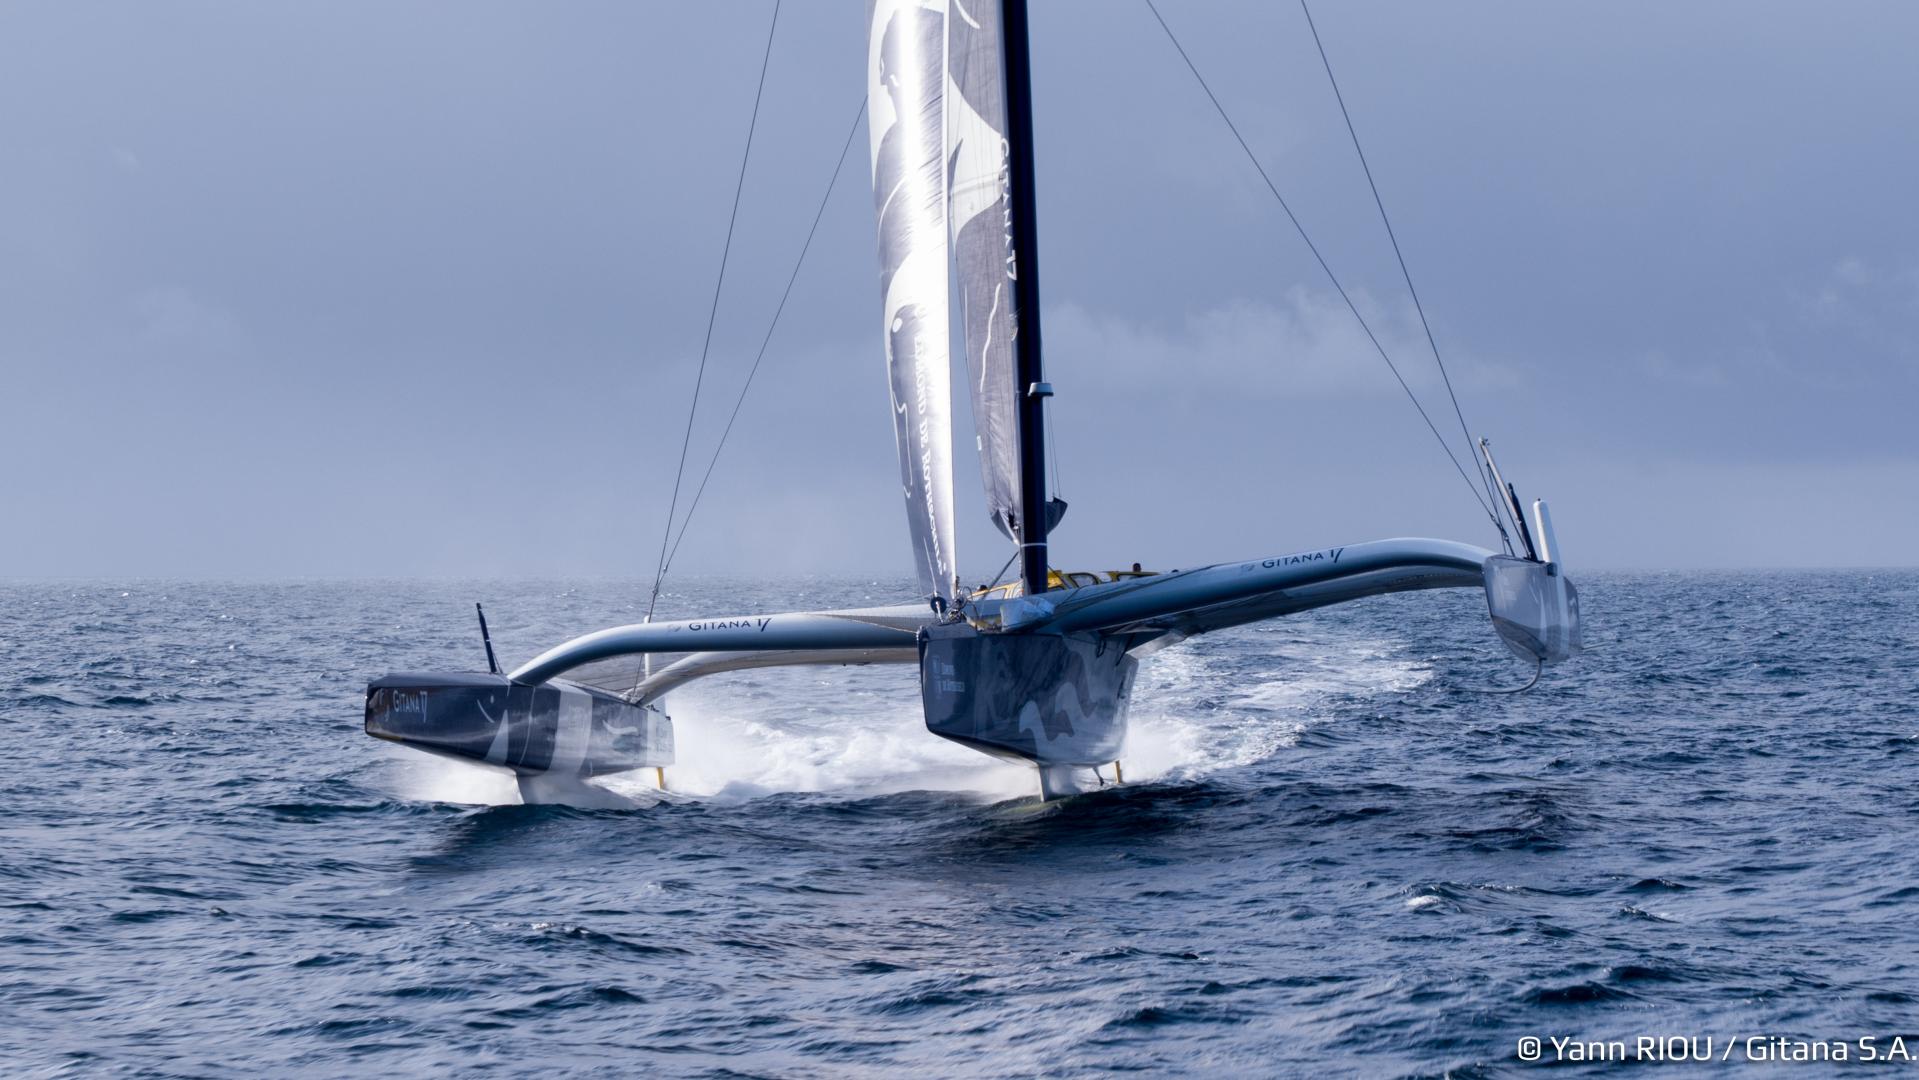 The Maxi Edmond de Rothschild, a large oceanic trimaran measuring 32 metres long and 23 metres wide 